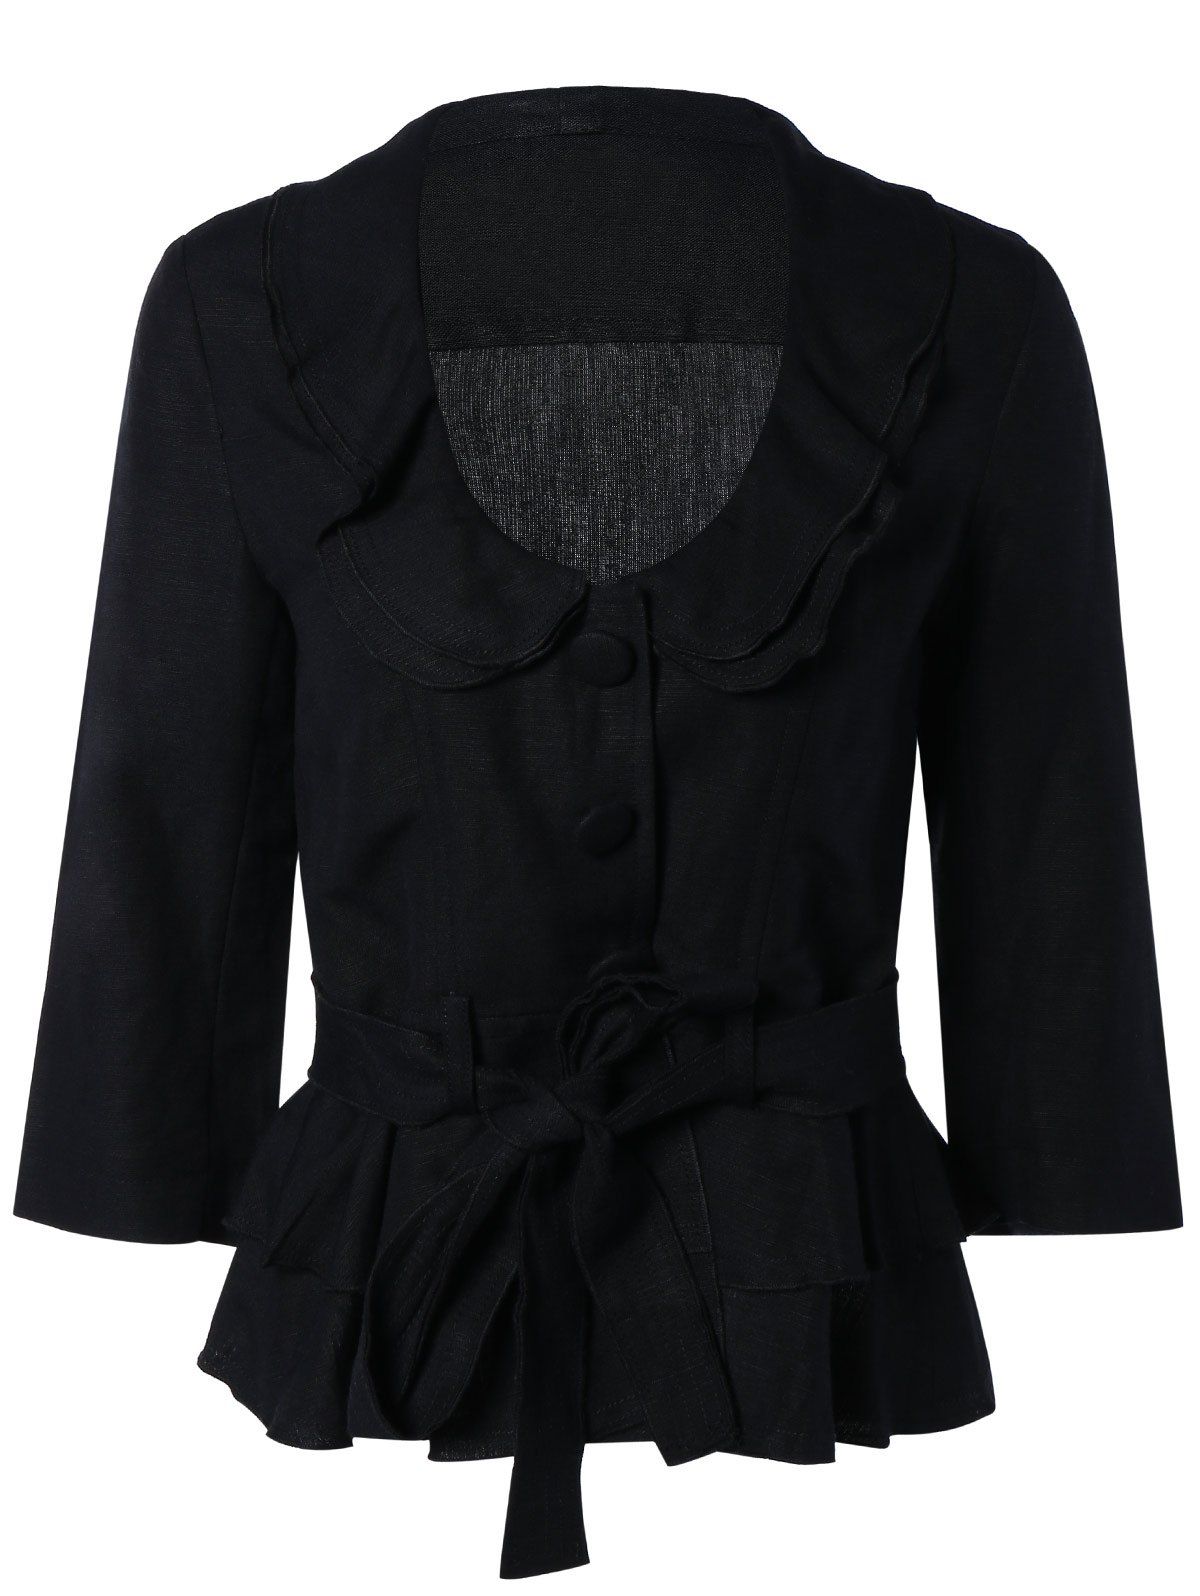 [35% OFF] Elegant Flounced Belt-Tie Buttoned Black Coat | Rosegal